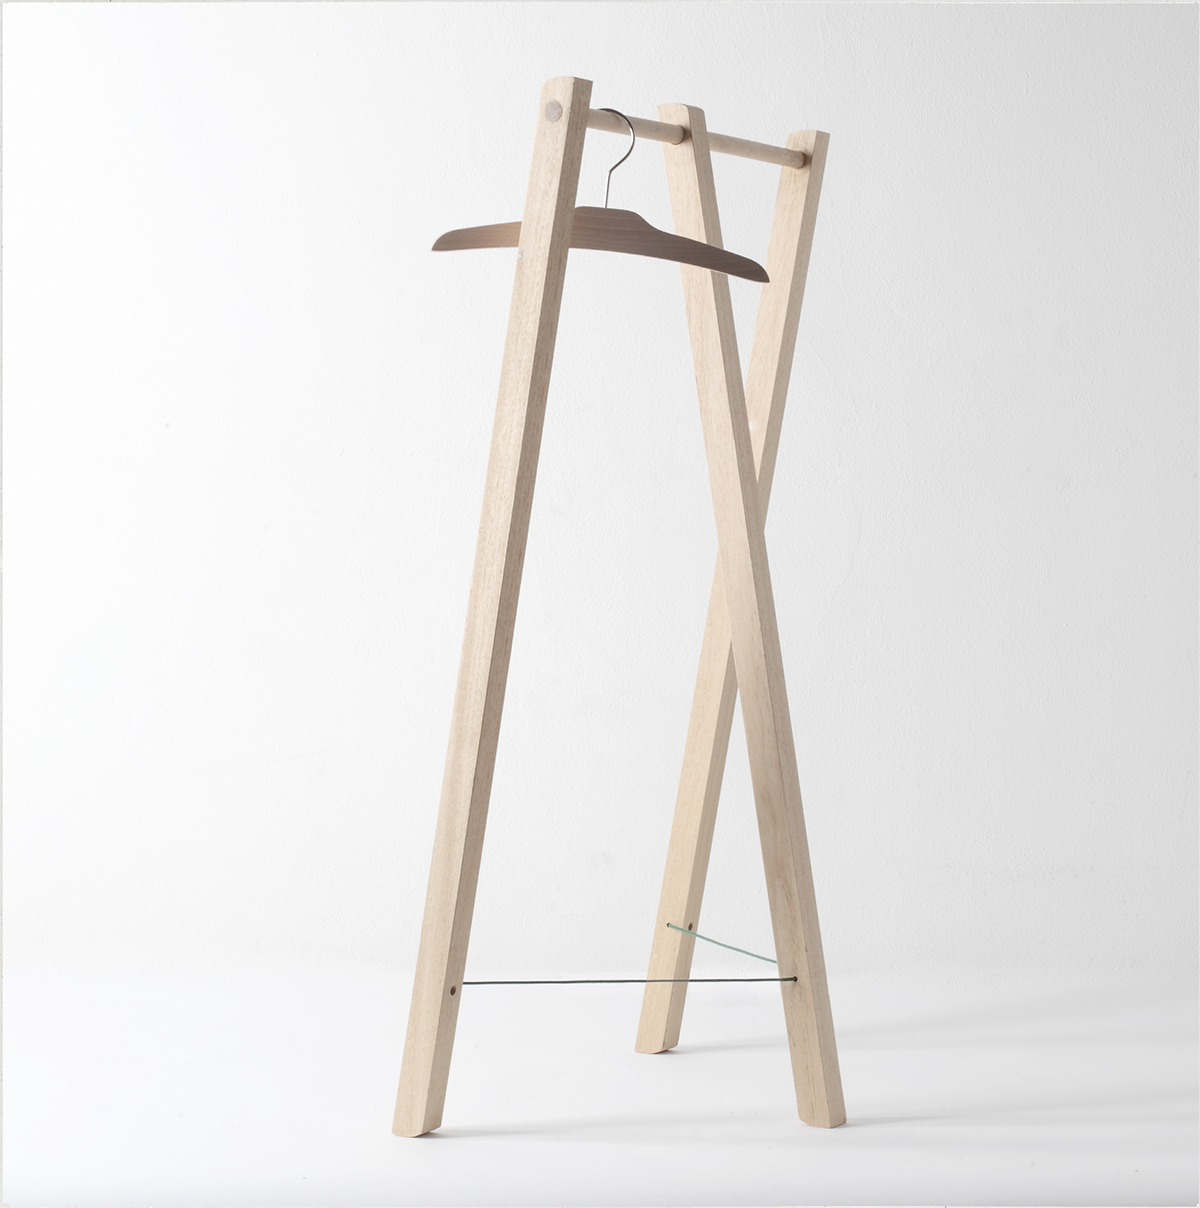 quaelà coat rack clothes furniture wood Carpentry DIY Alessandro foglino Interior lowcost